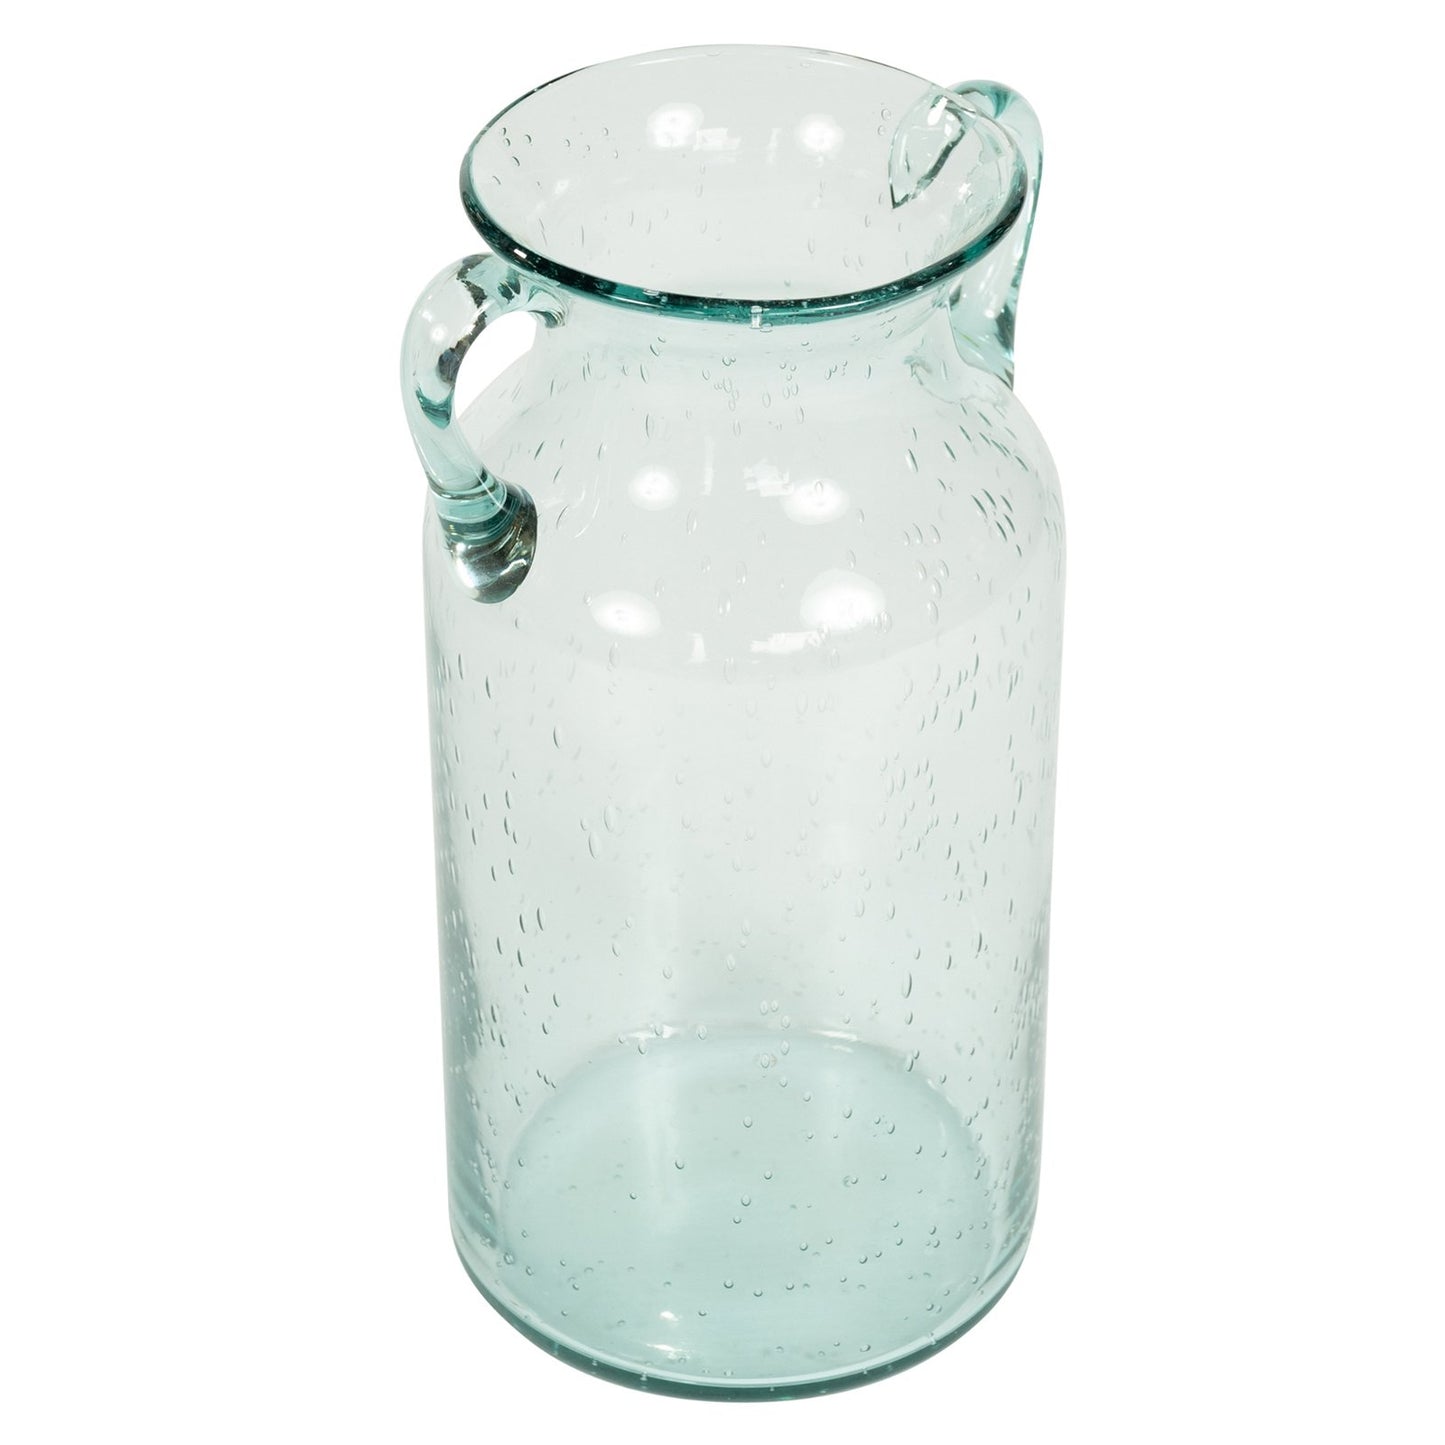 Glass Flower Vase with Handles Daisy Bubble Design 25cm